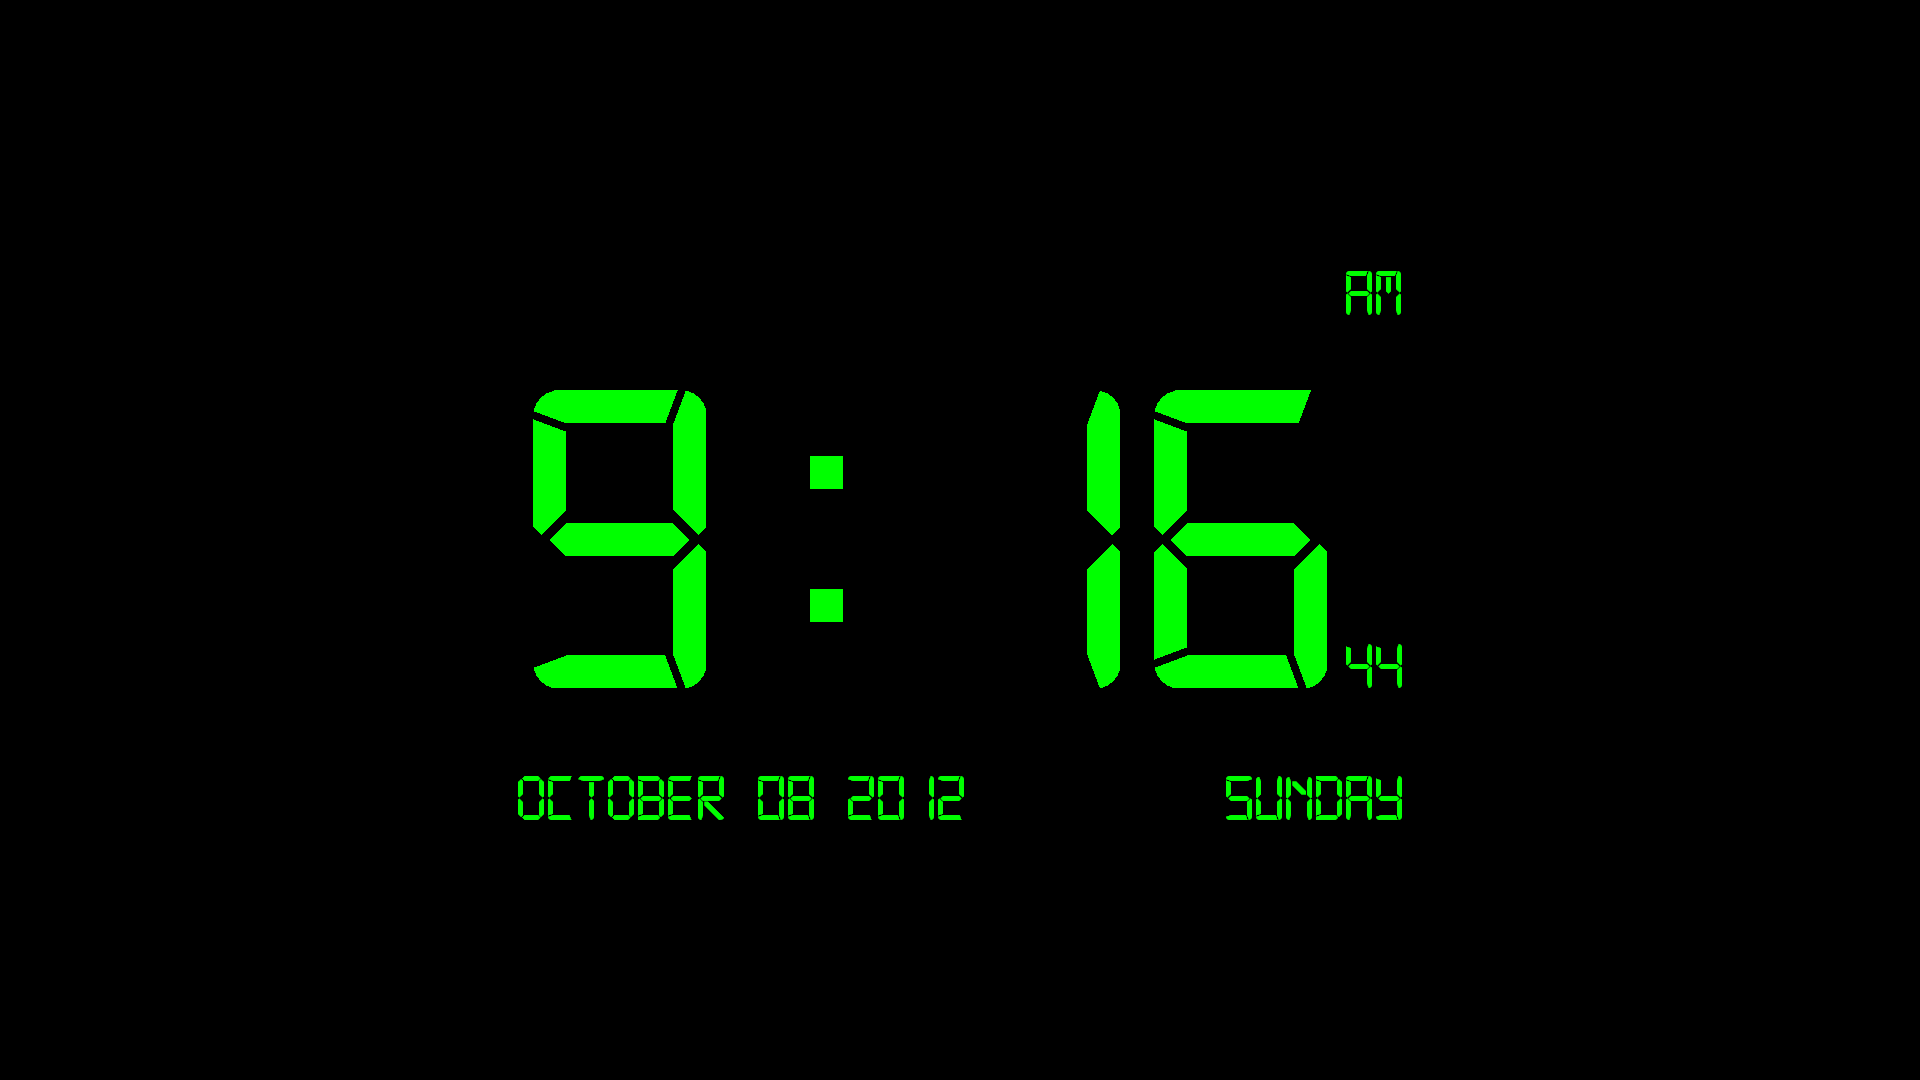 Digital Clock 7   Digital Clock 7 is a screen saver that displays the